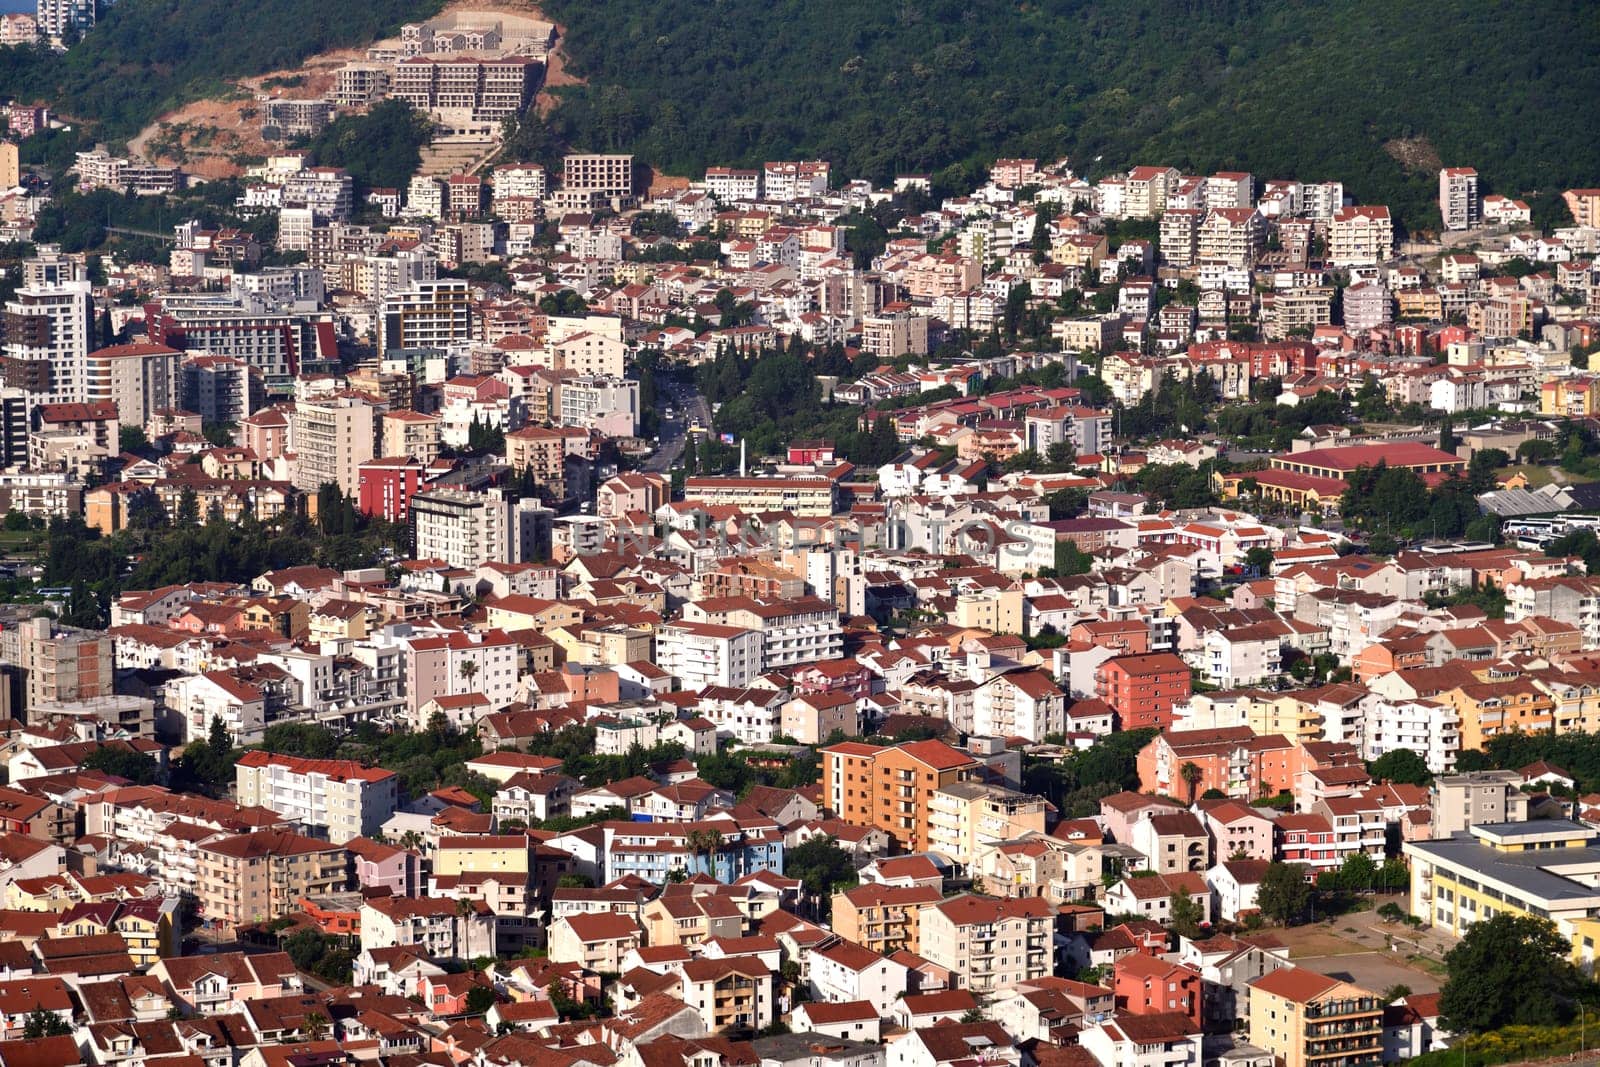 View of Budva city from above, Montenegro by olgavolodina